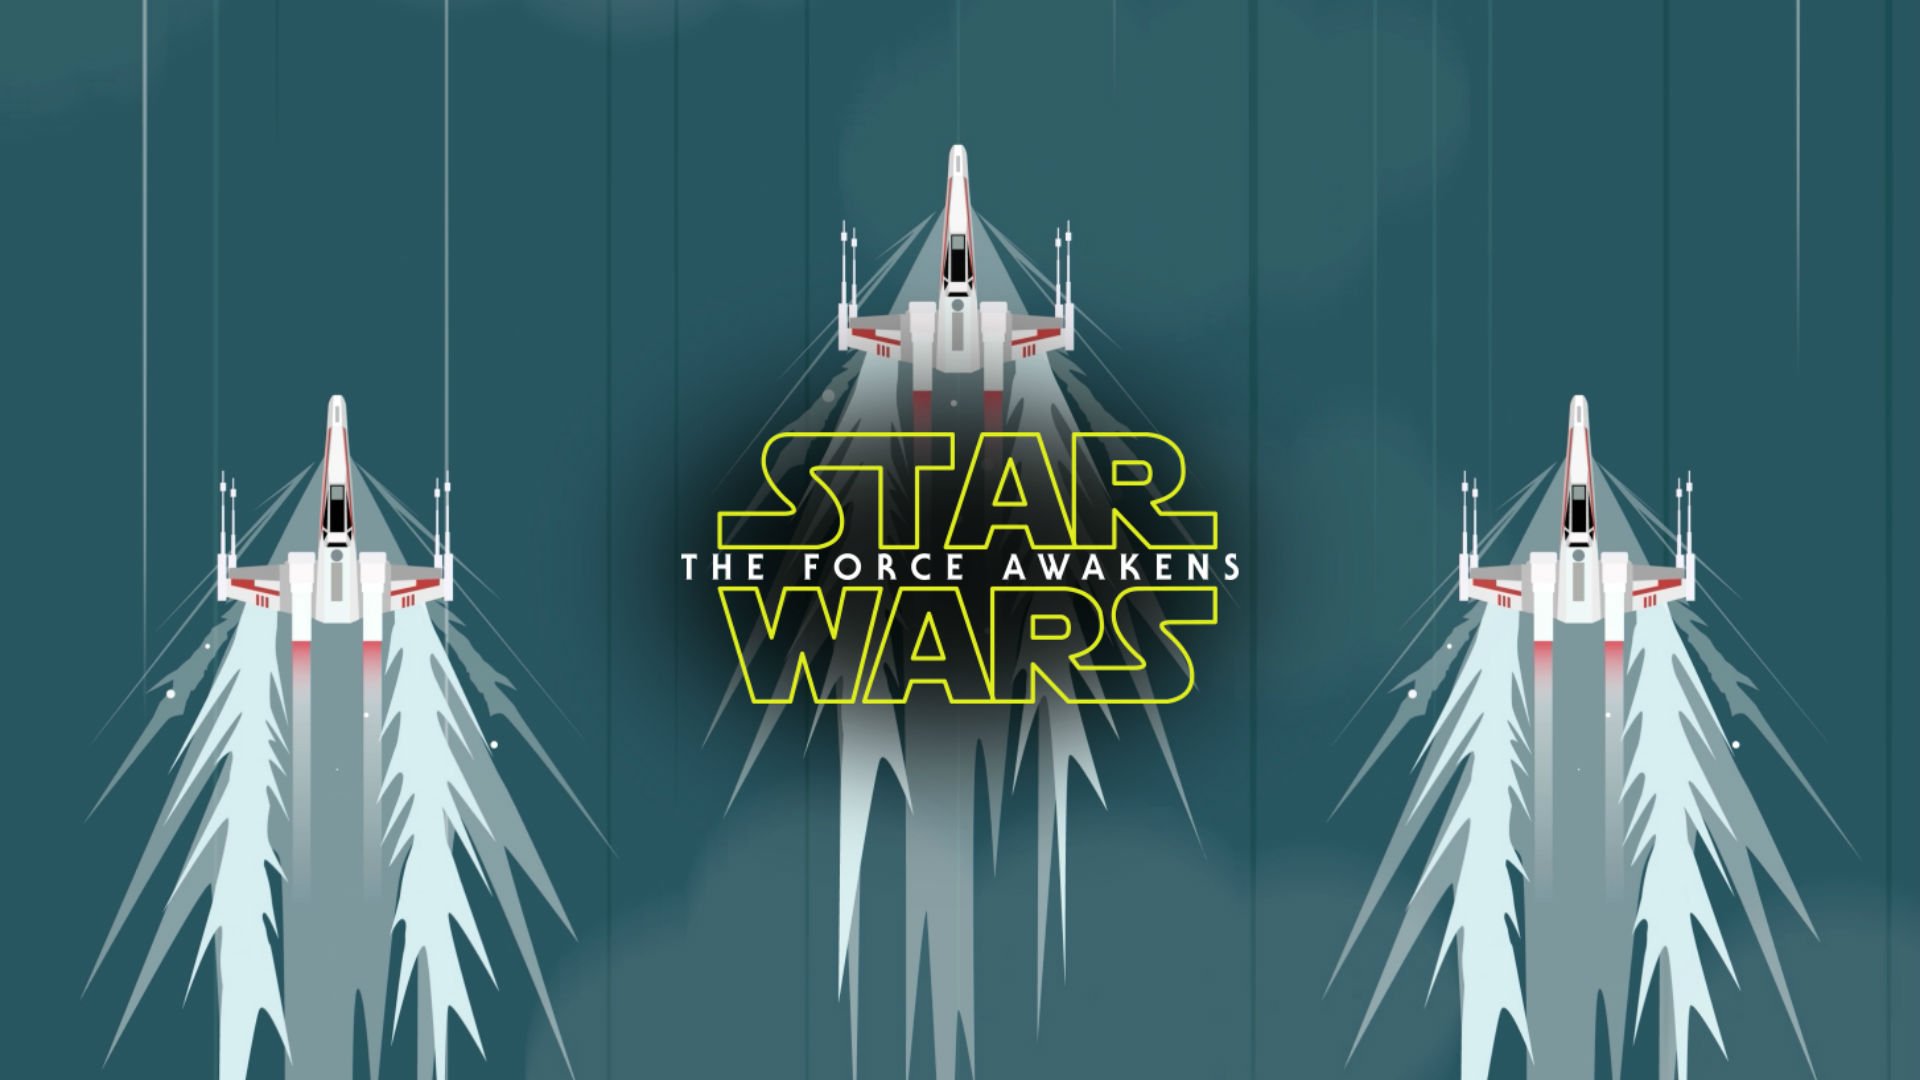  sci fi 1star wars force awakens spaceship poster wallpaper background